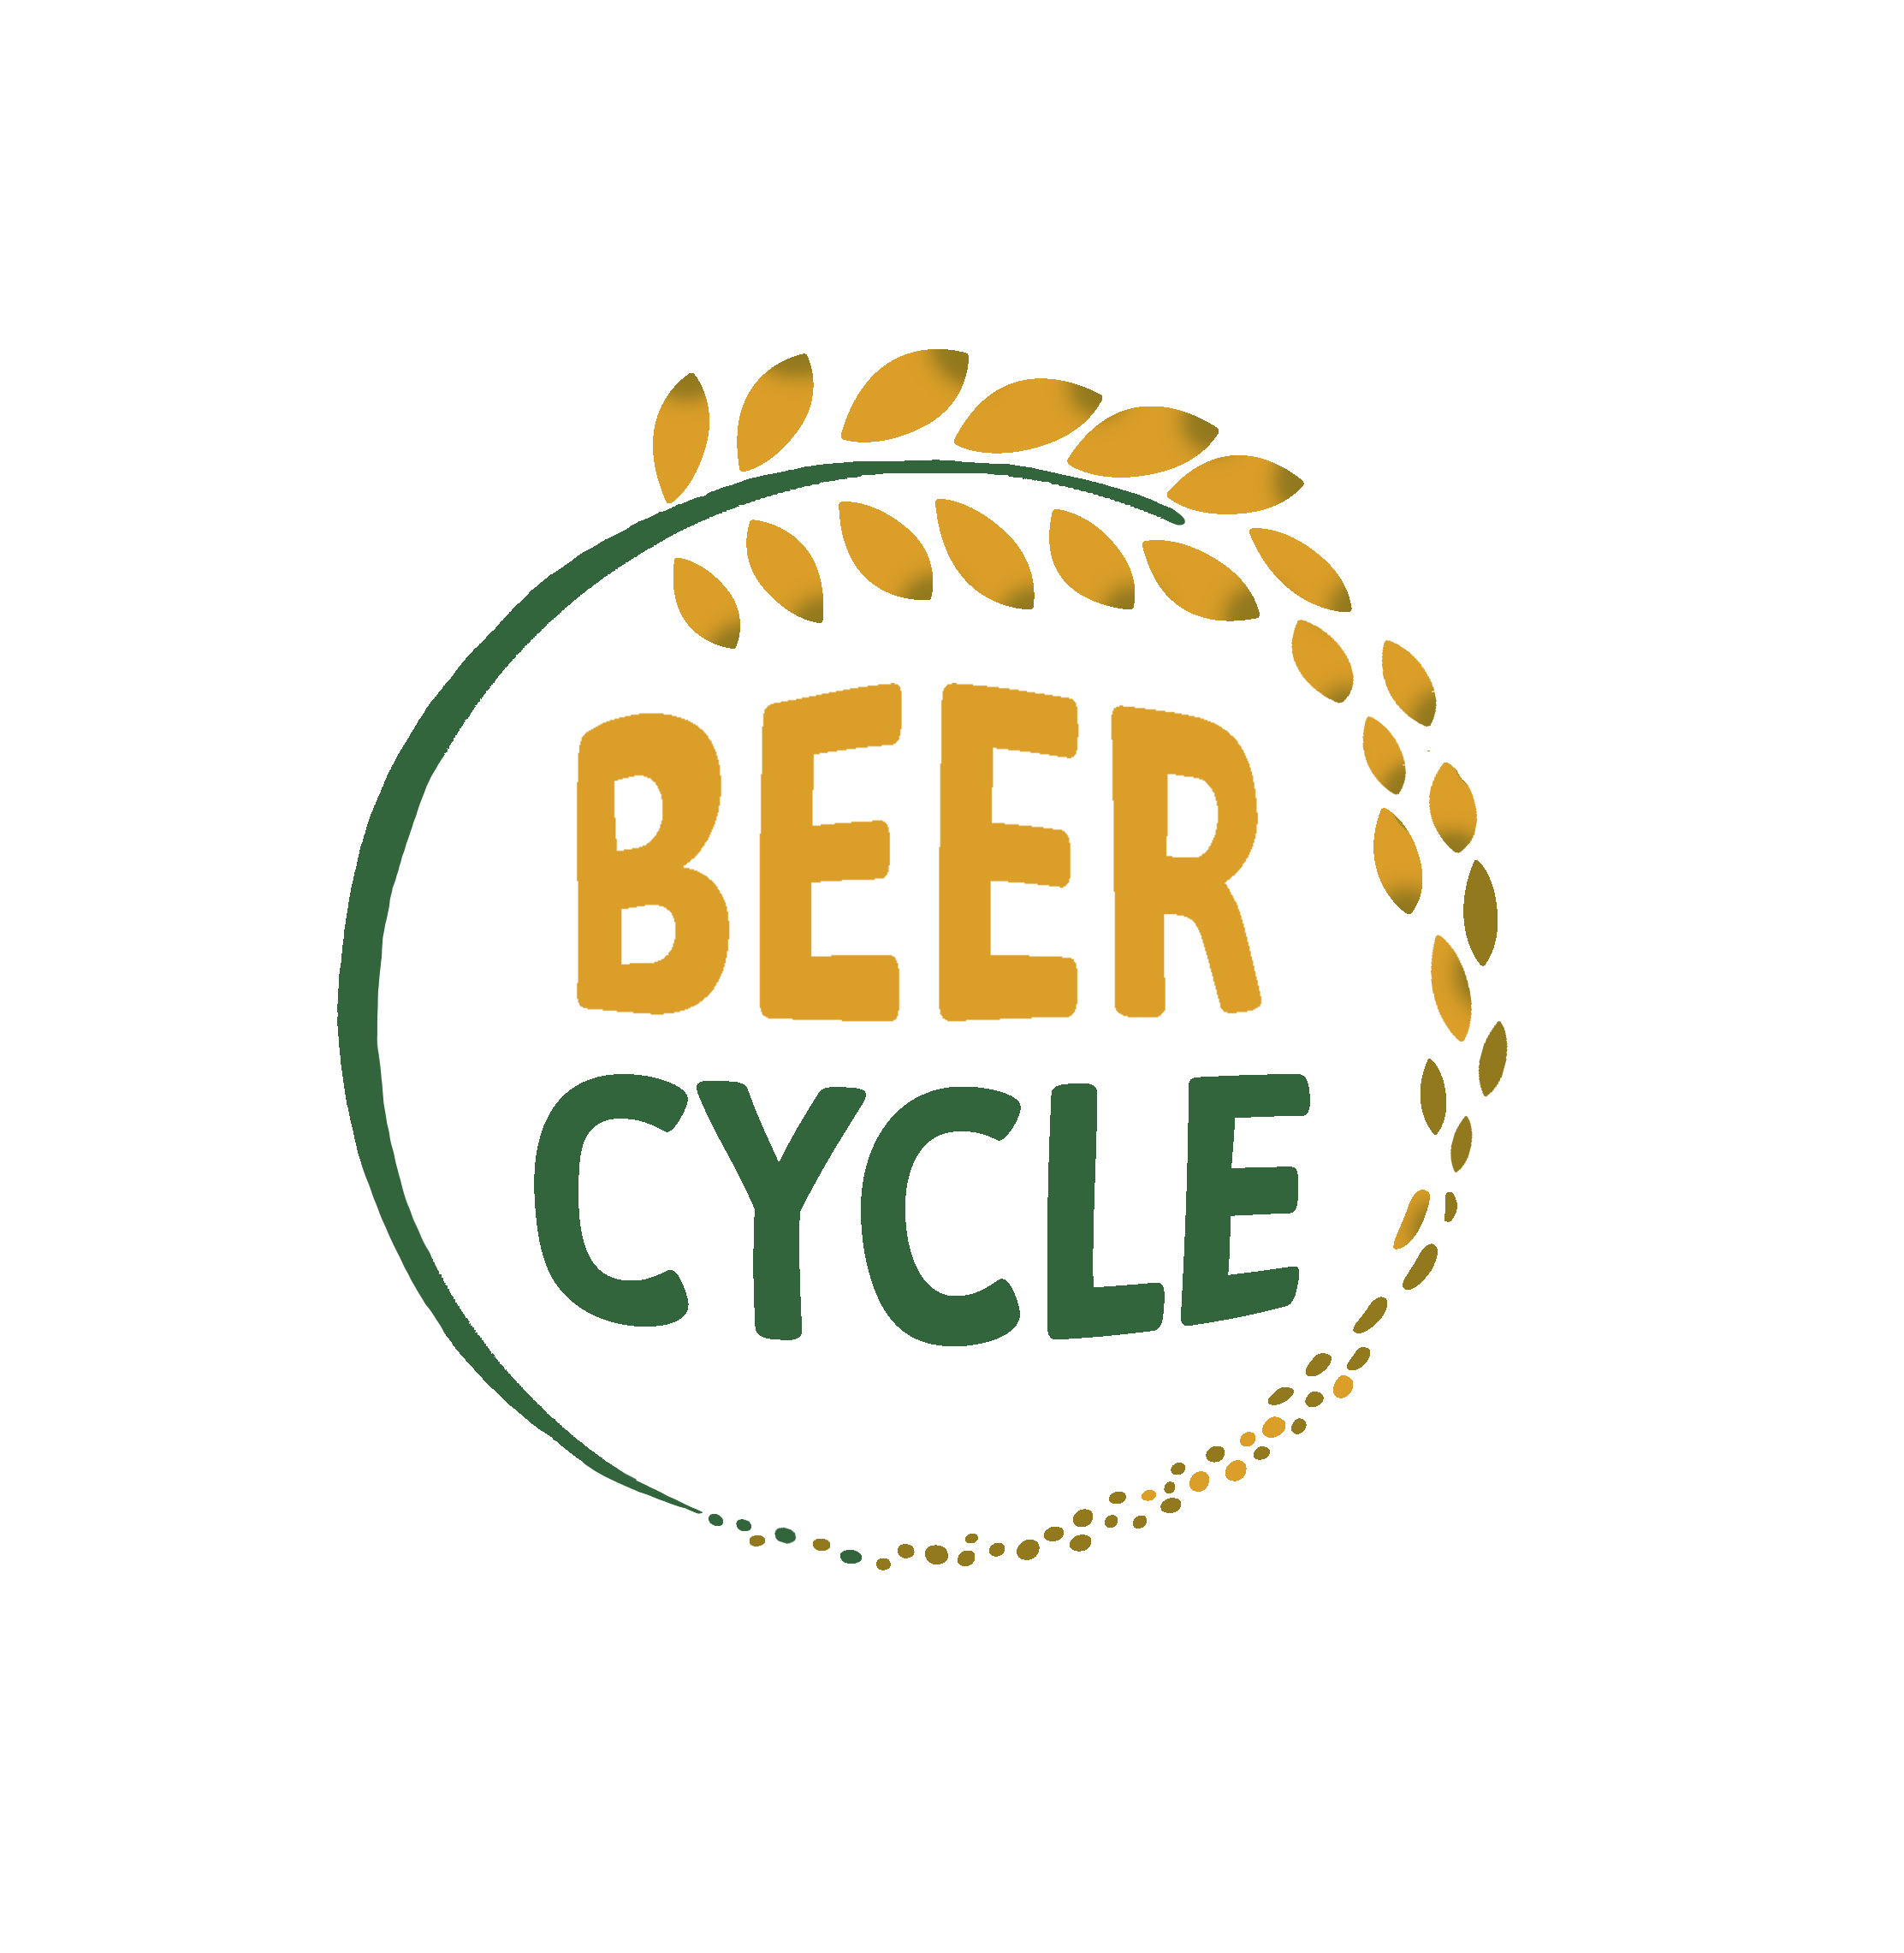 Beer cycle logo